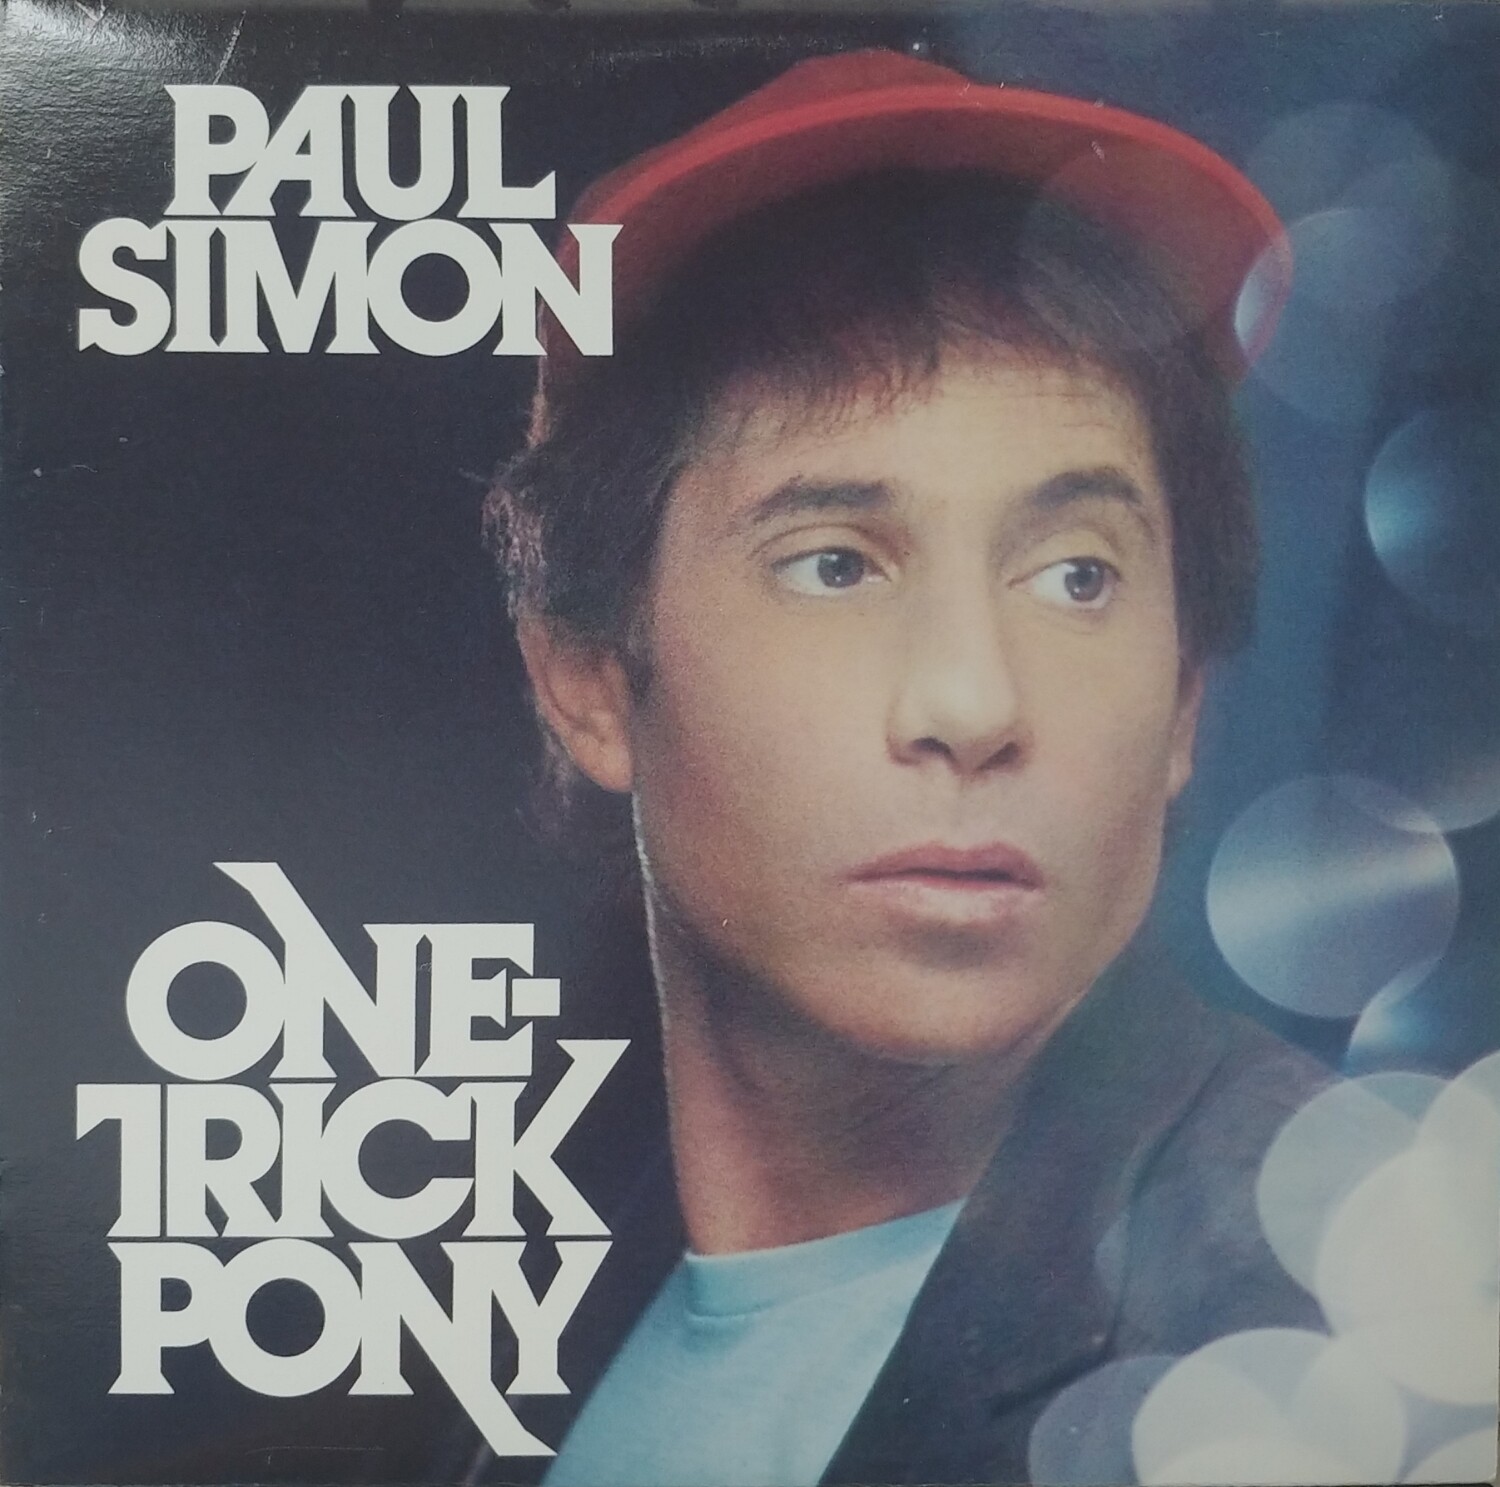 Paul Simon - One trick pony